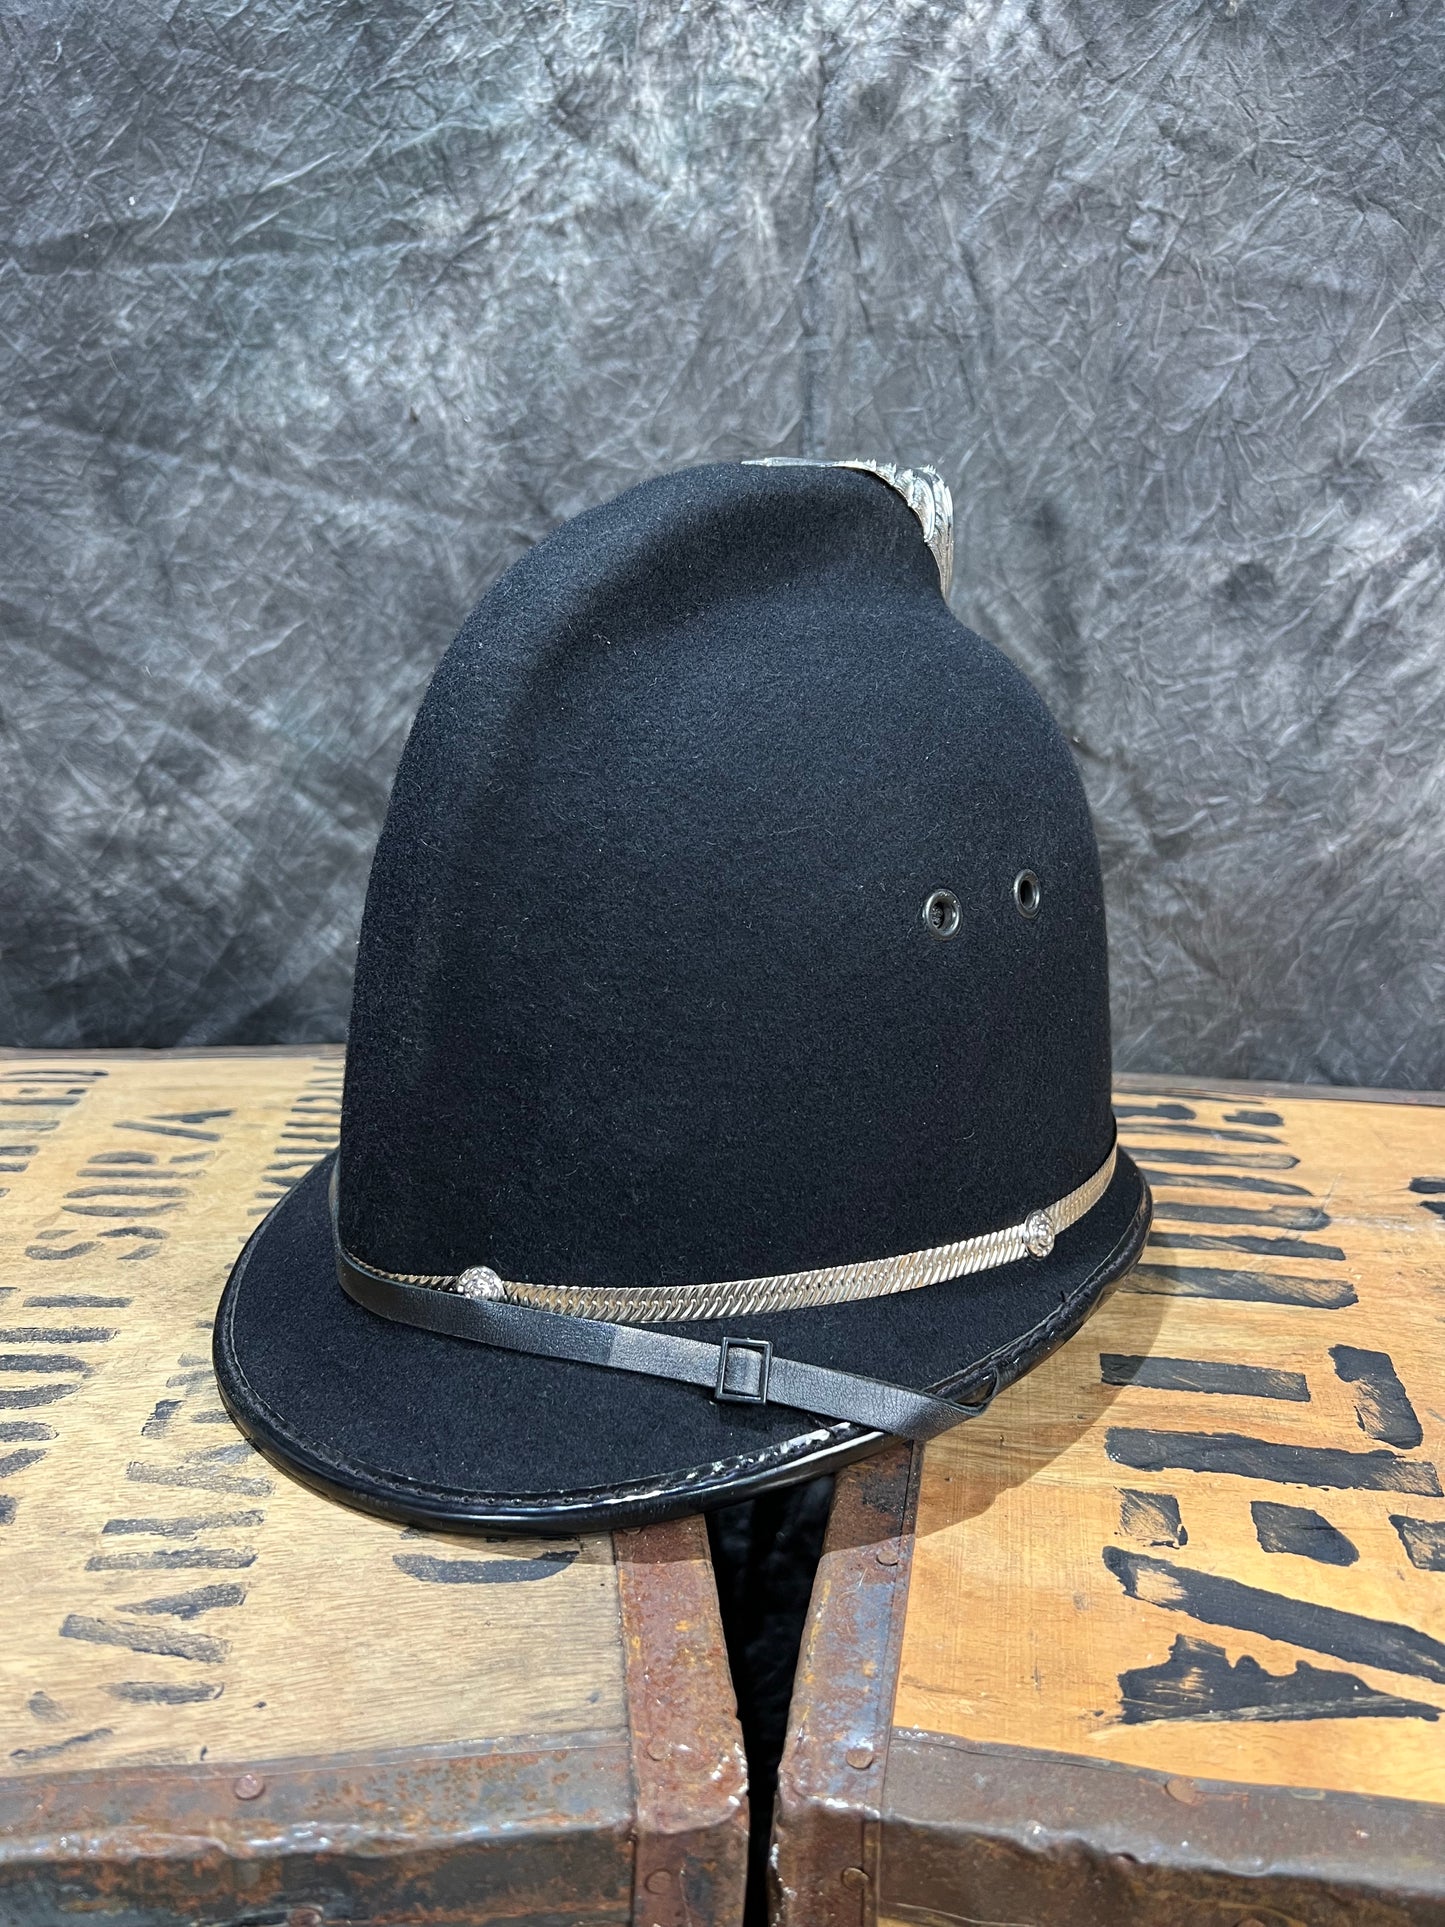 Obsolete British Police Bobby Helmet Hat With Essex Badge Collector Badge Memorabilia